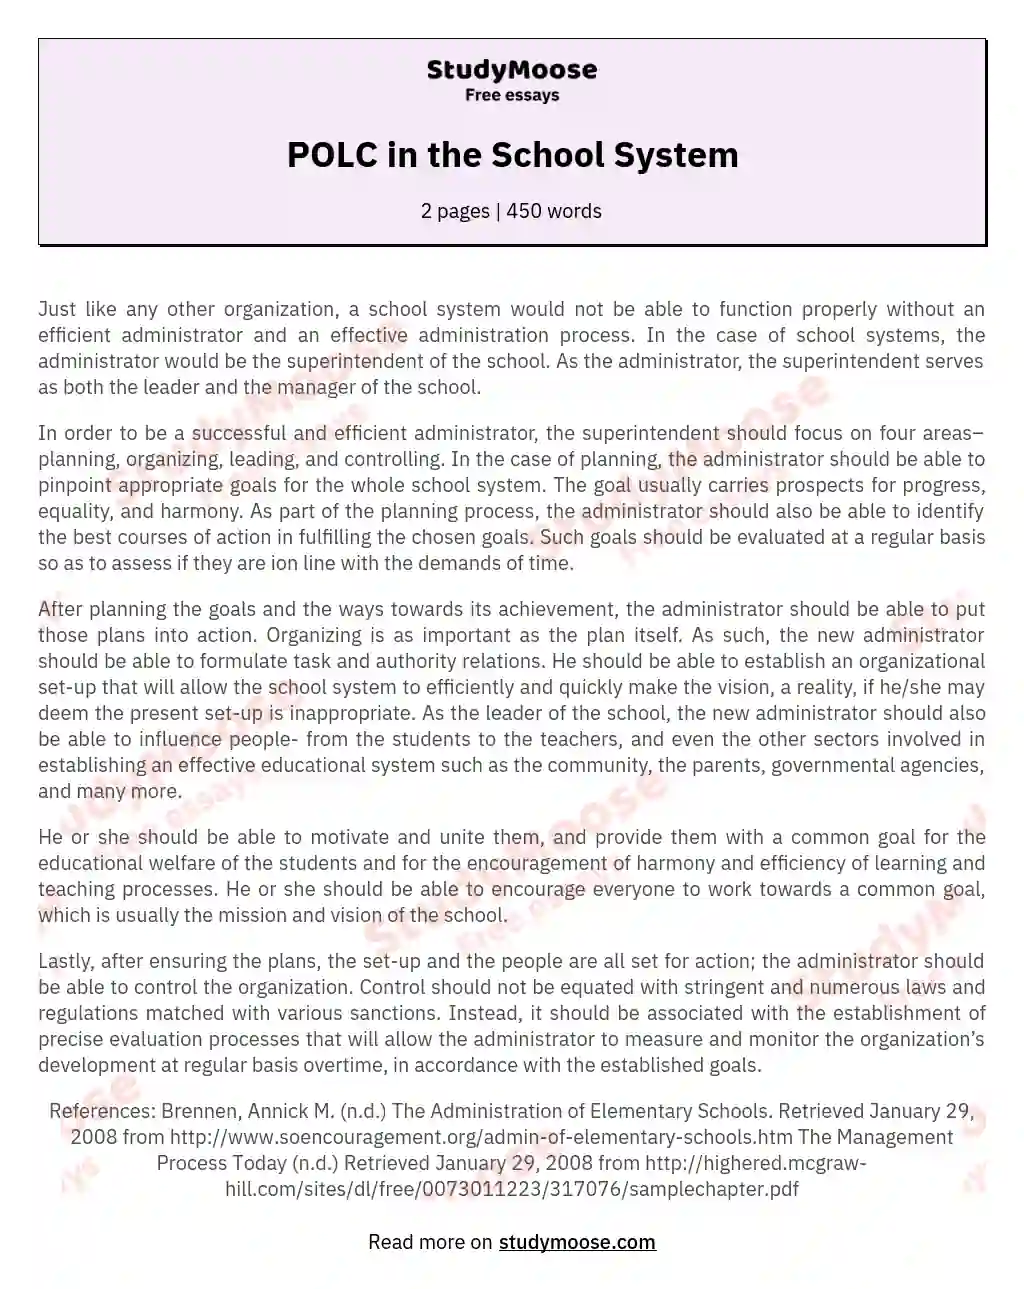 POLC in the School System essay